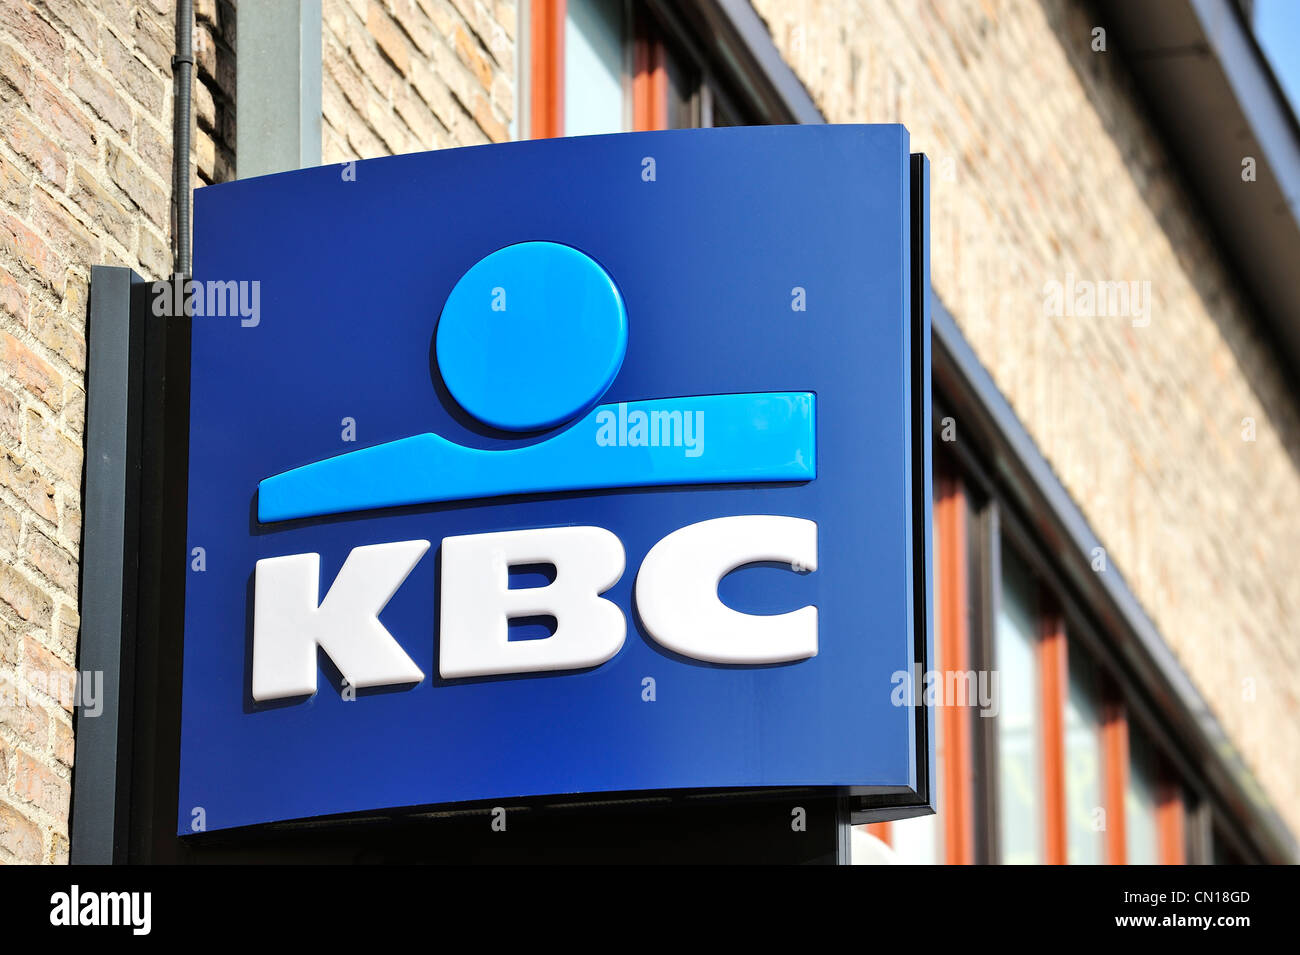 Signboard with logo of KBC bank, Flanders, Belgium Stock Photo